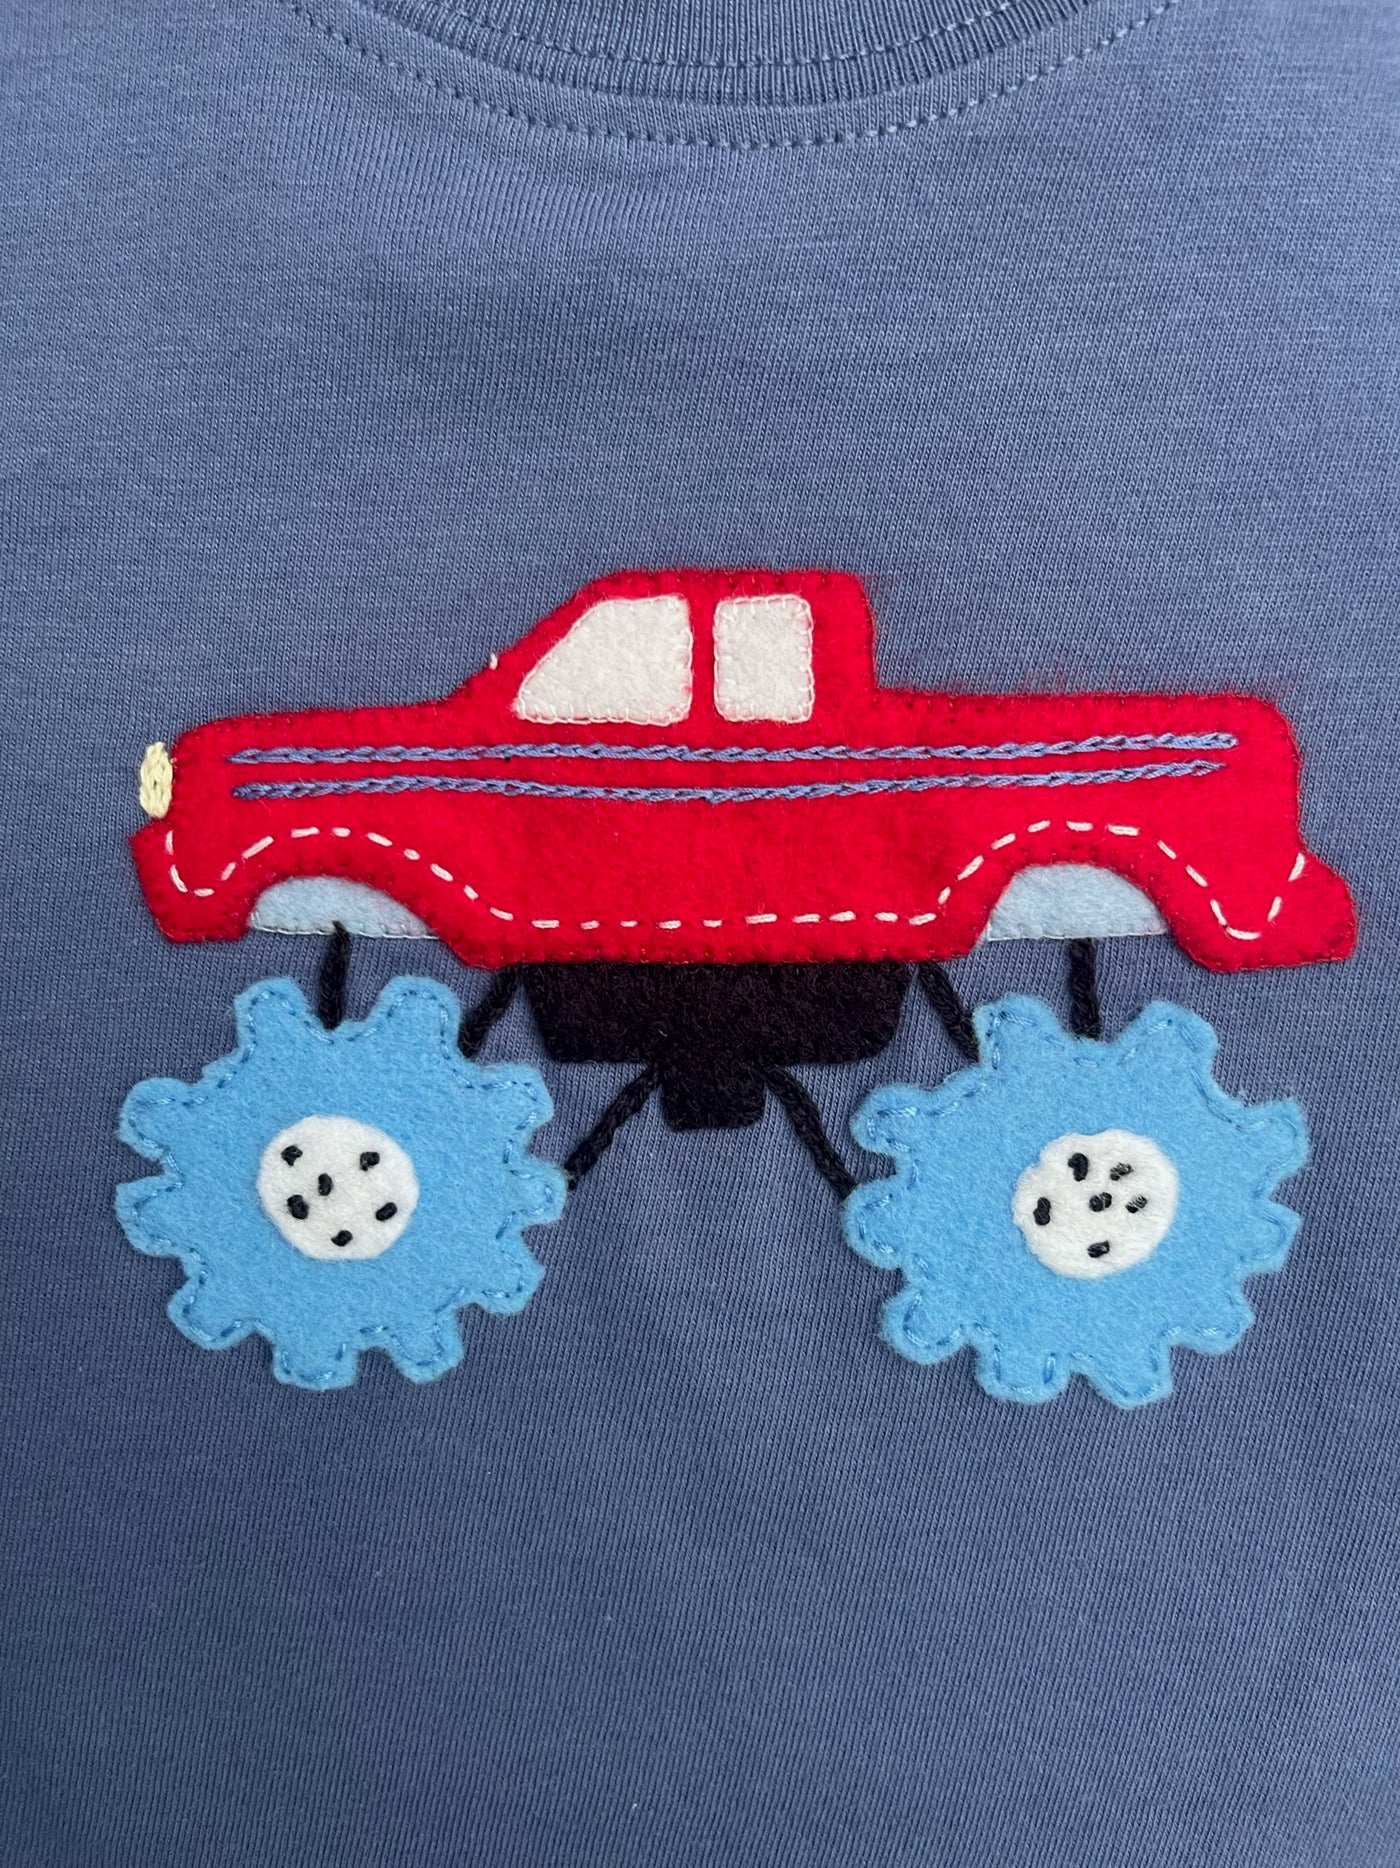 S/S Blue Monster Truck T-Shirt